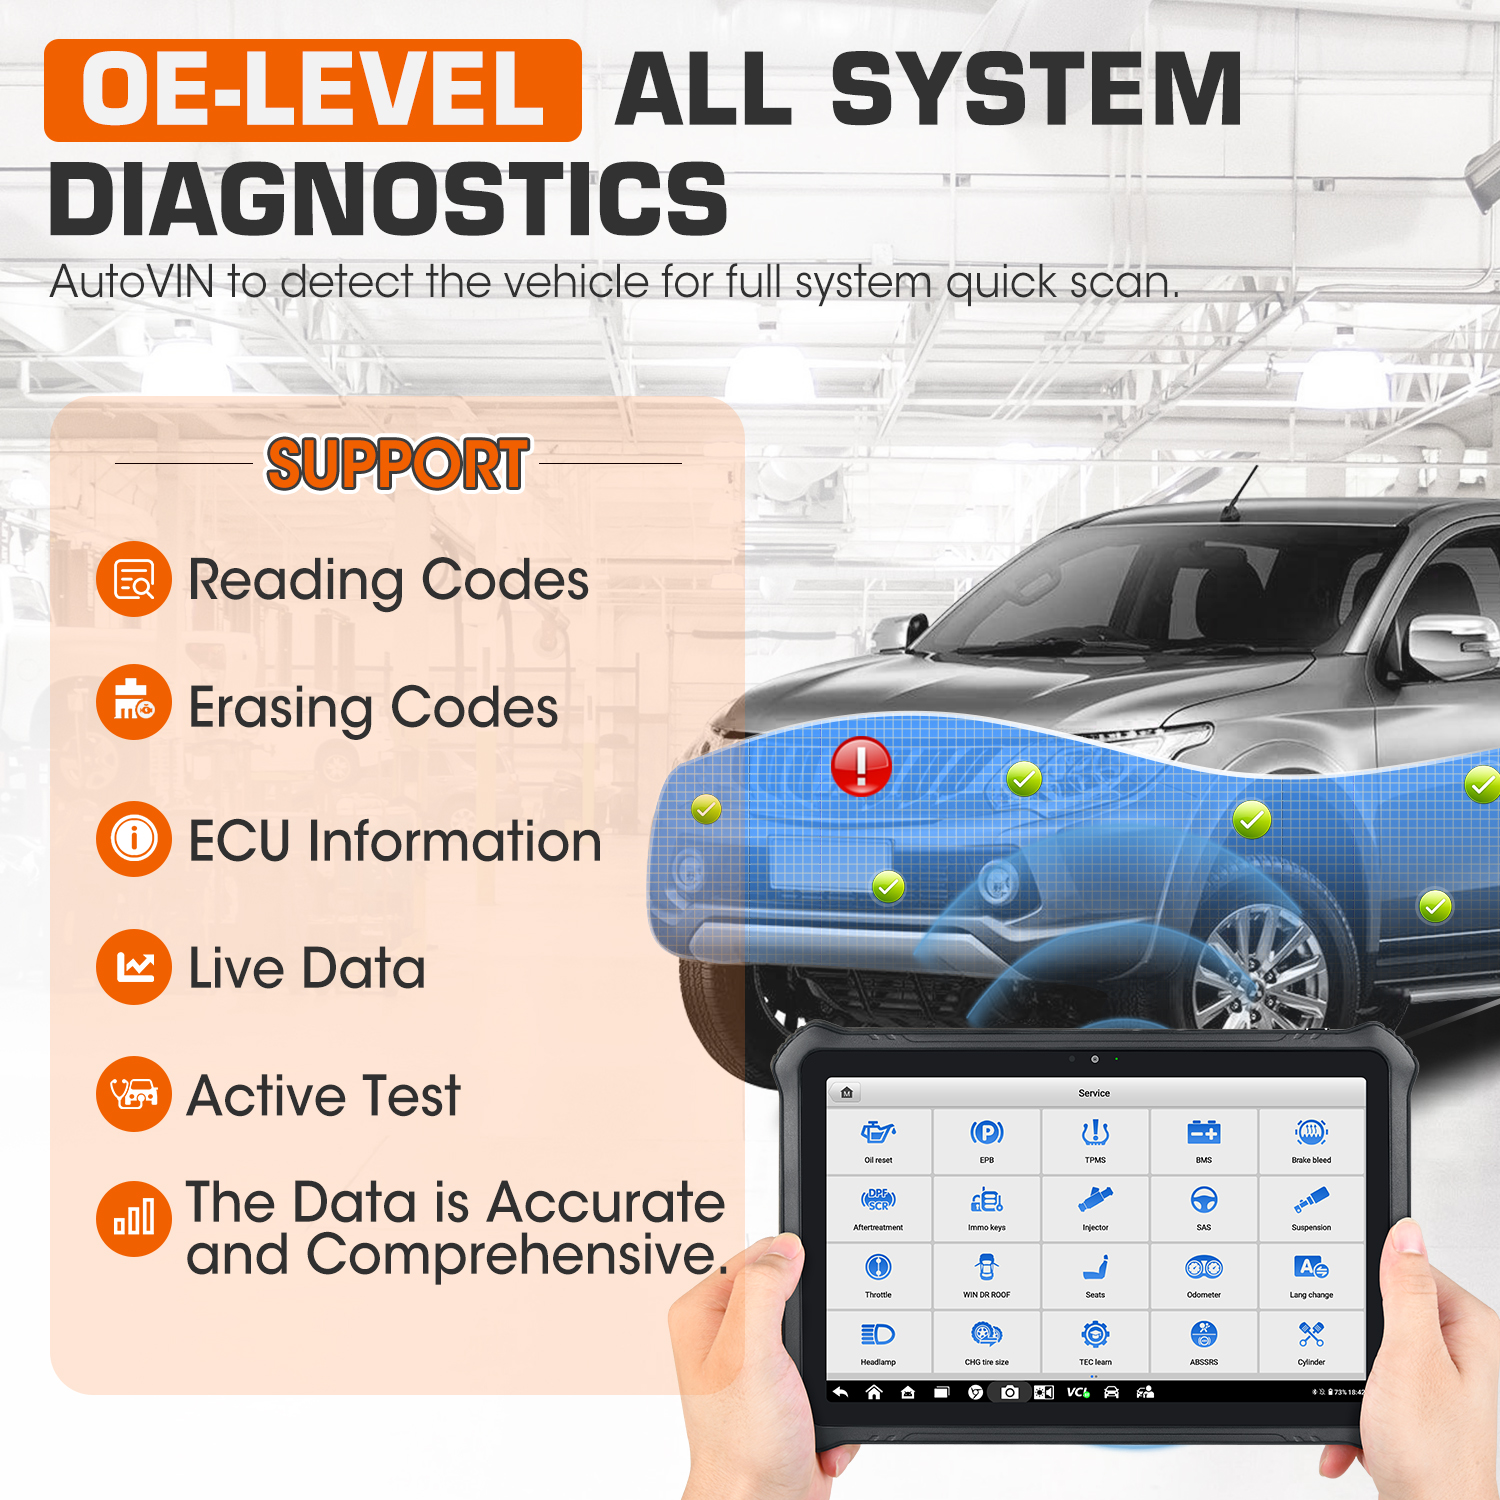 Autel OTOFIX D1 MAX Professional Diagnostic Tool 36+ Service Functions Live  Data Active Test